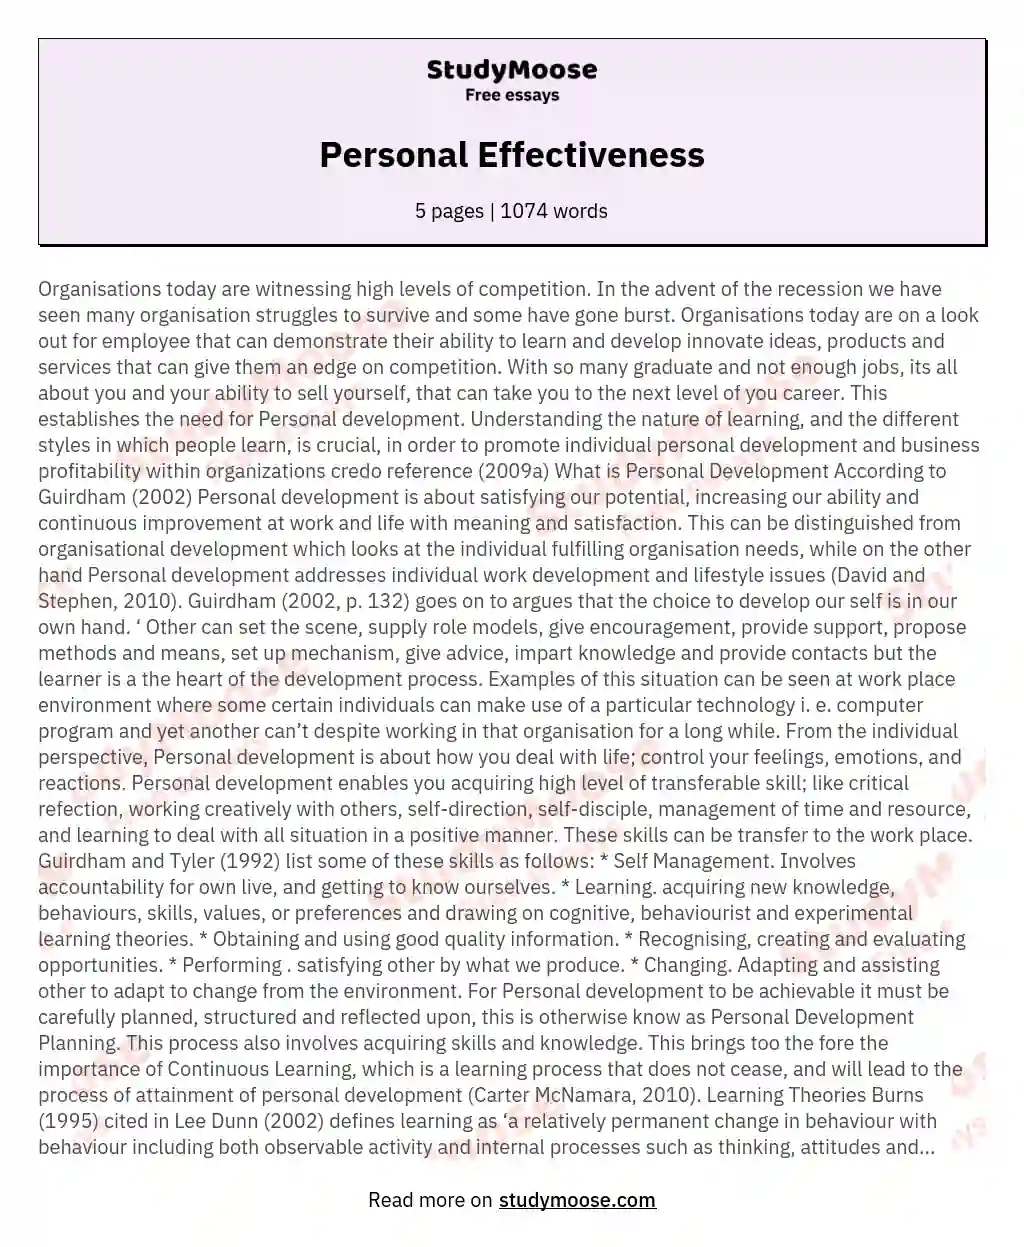 Personal Effectiveness essay